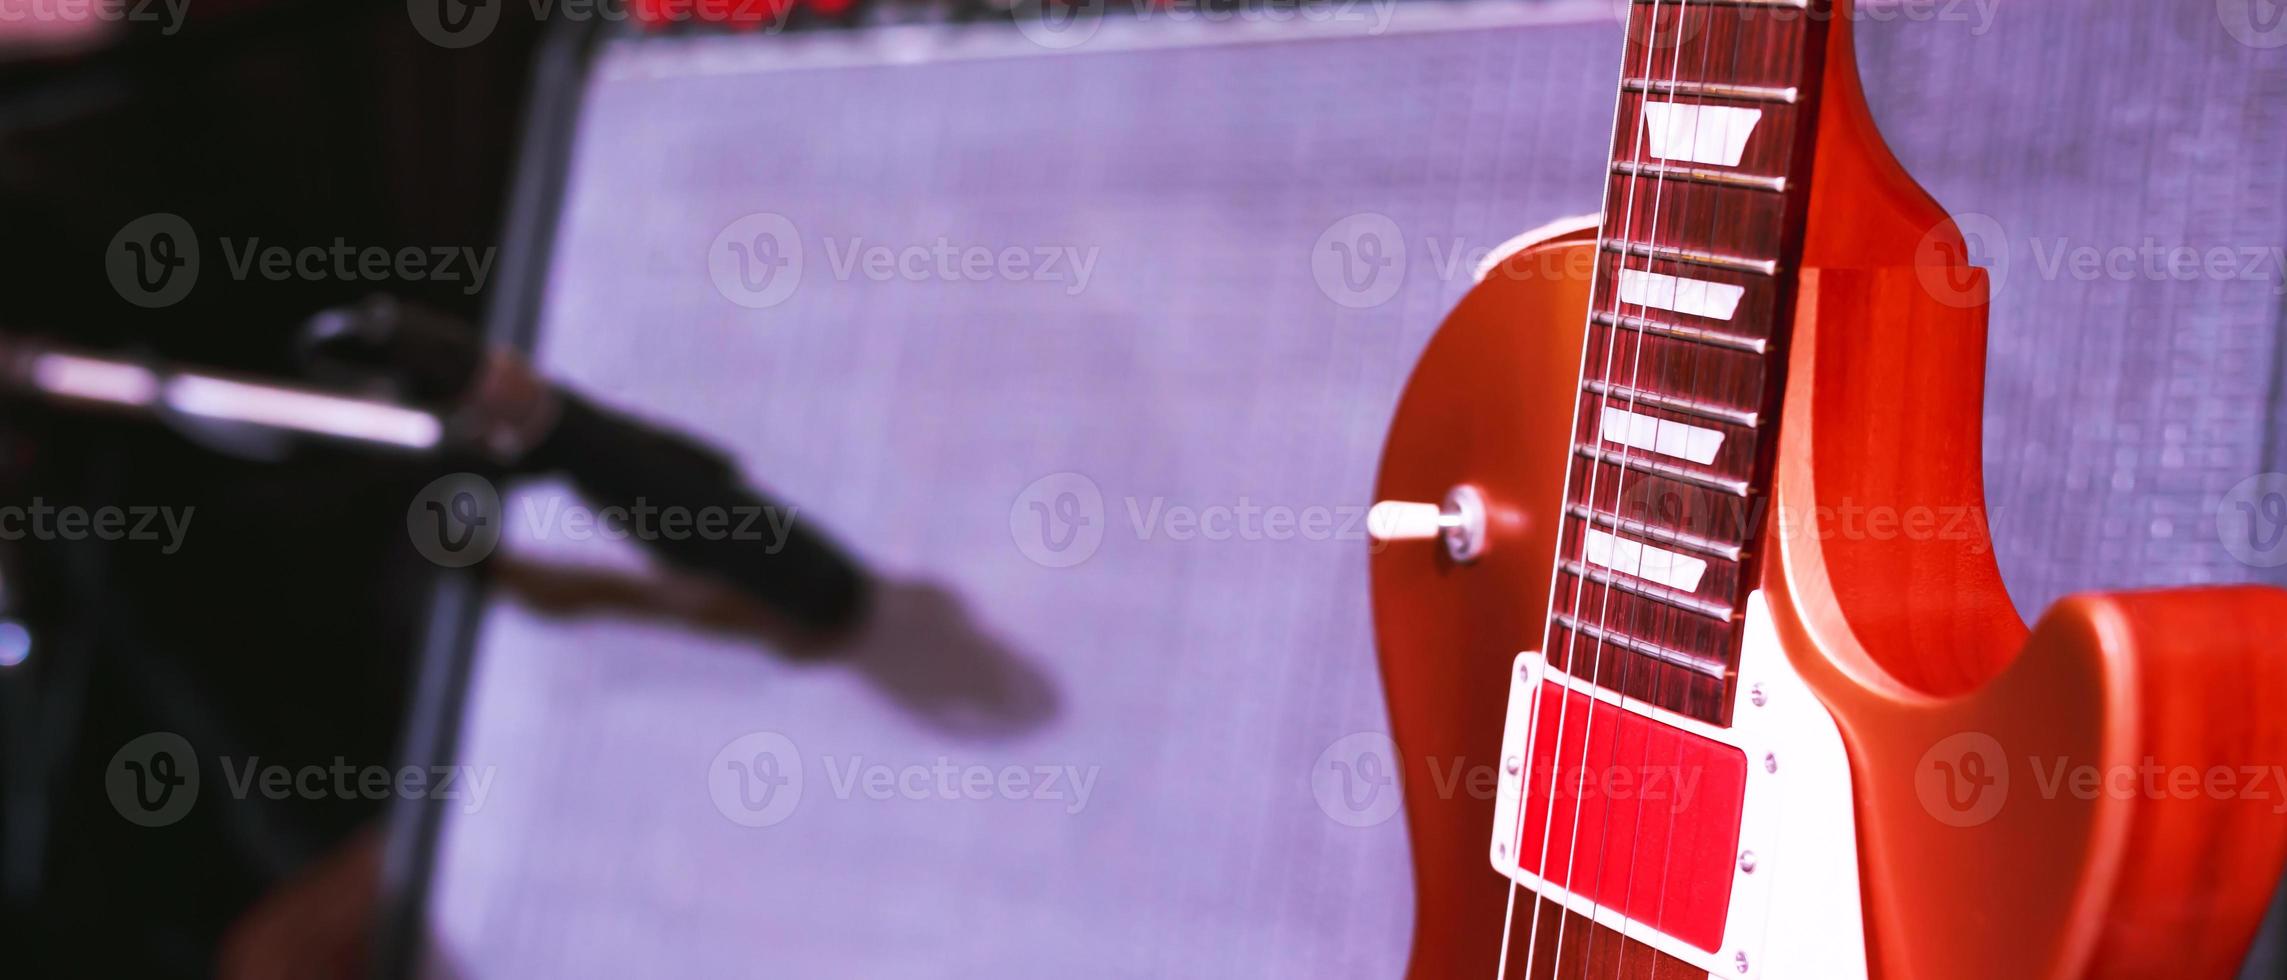 elektrisk gitarr. musikalisk instrument med på skede i konsert. foto